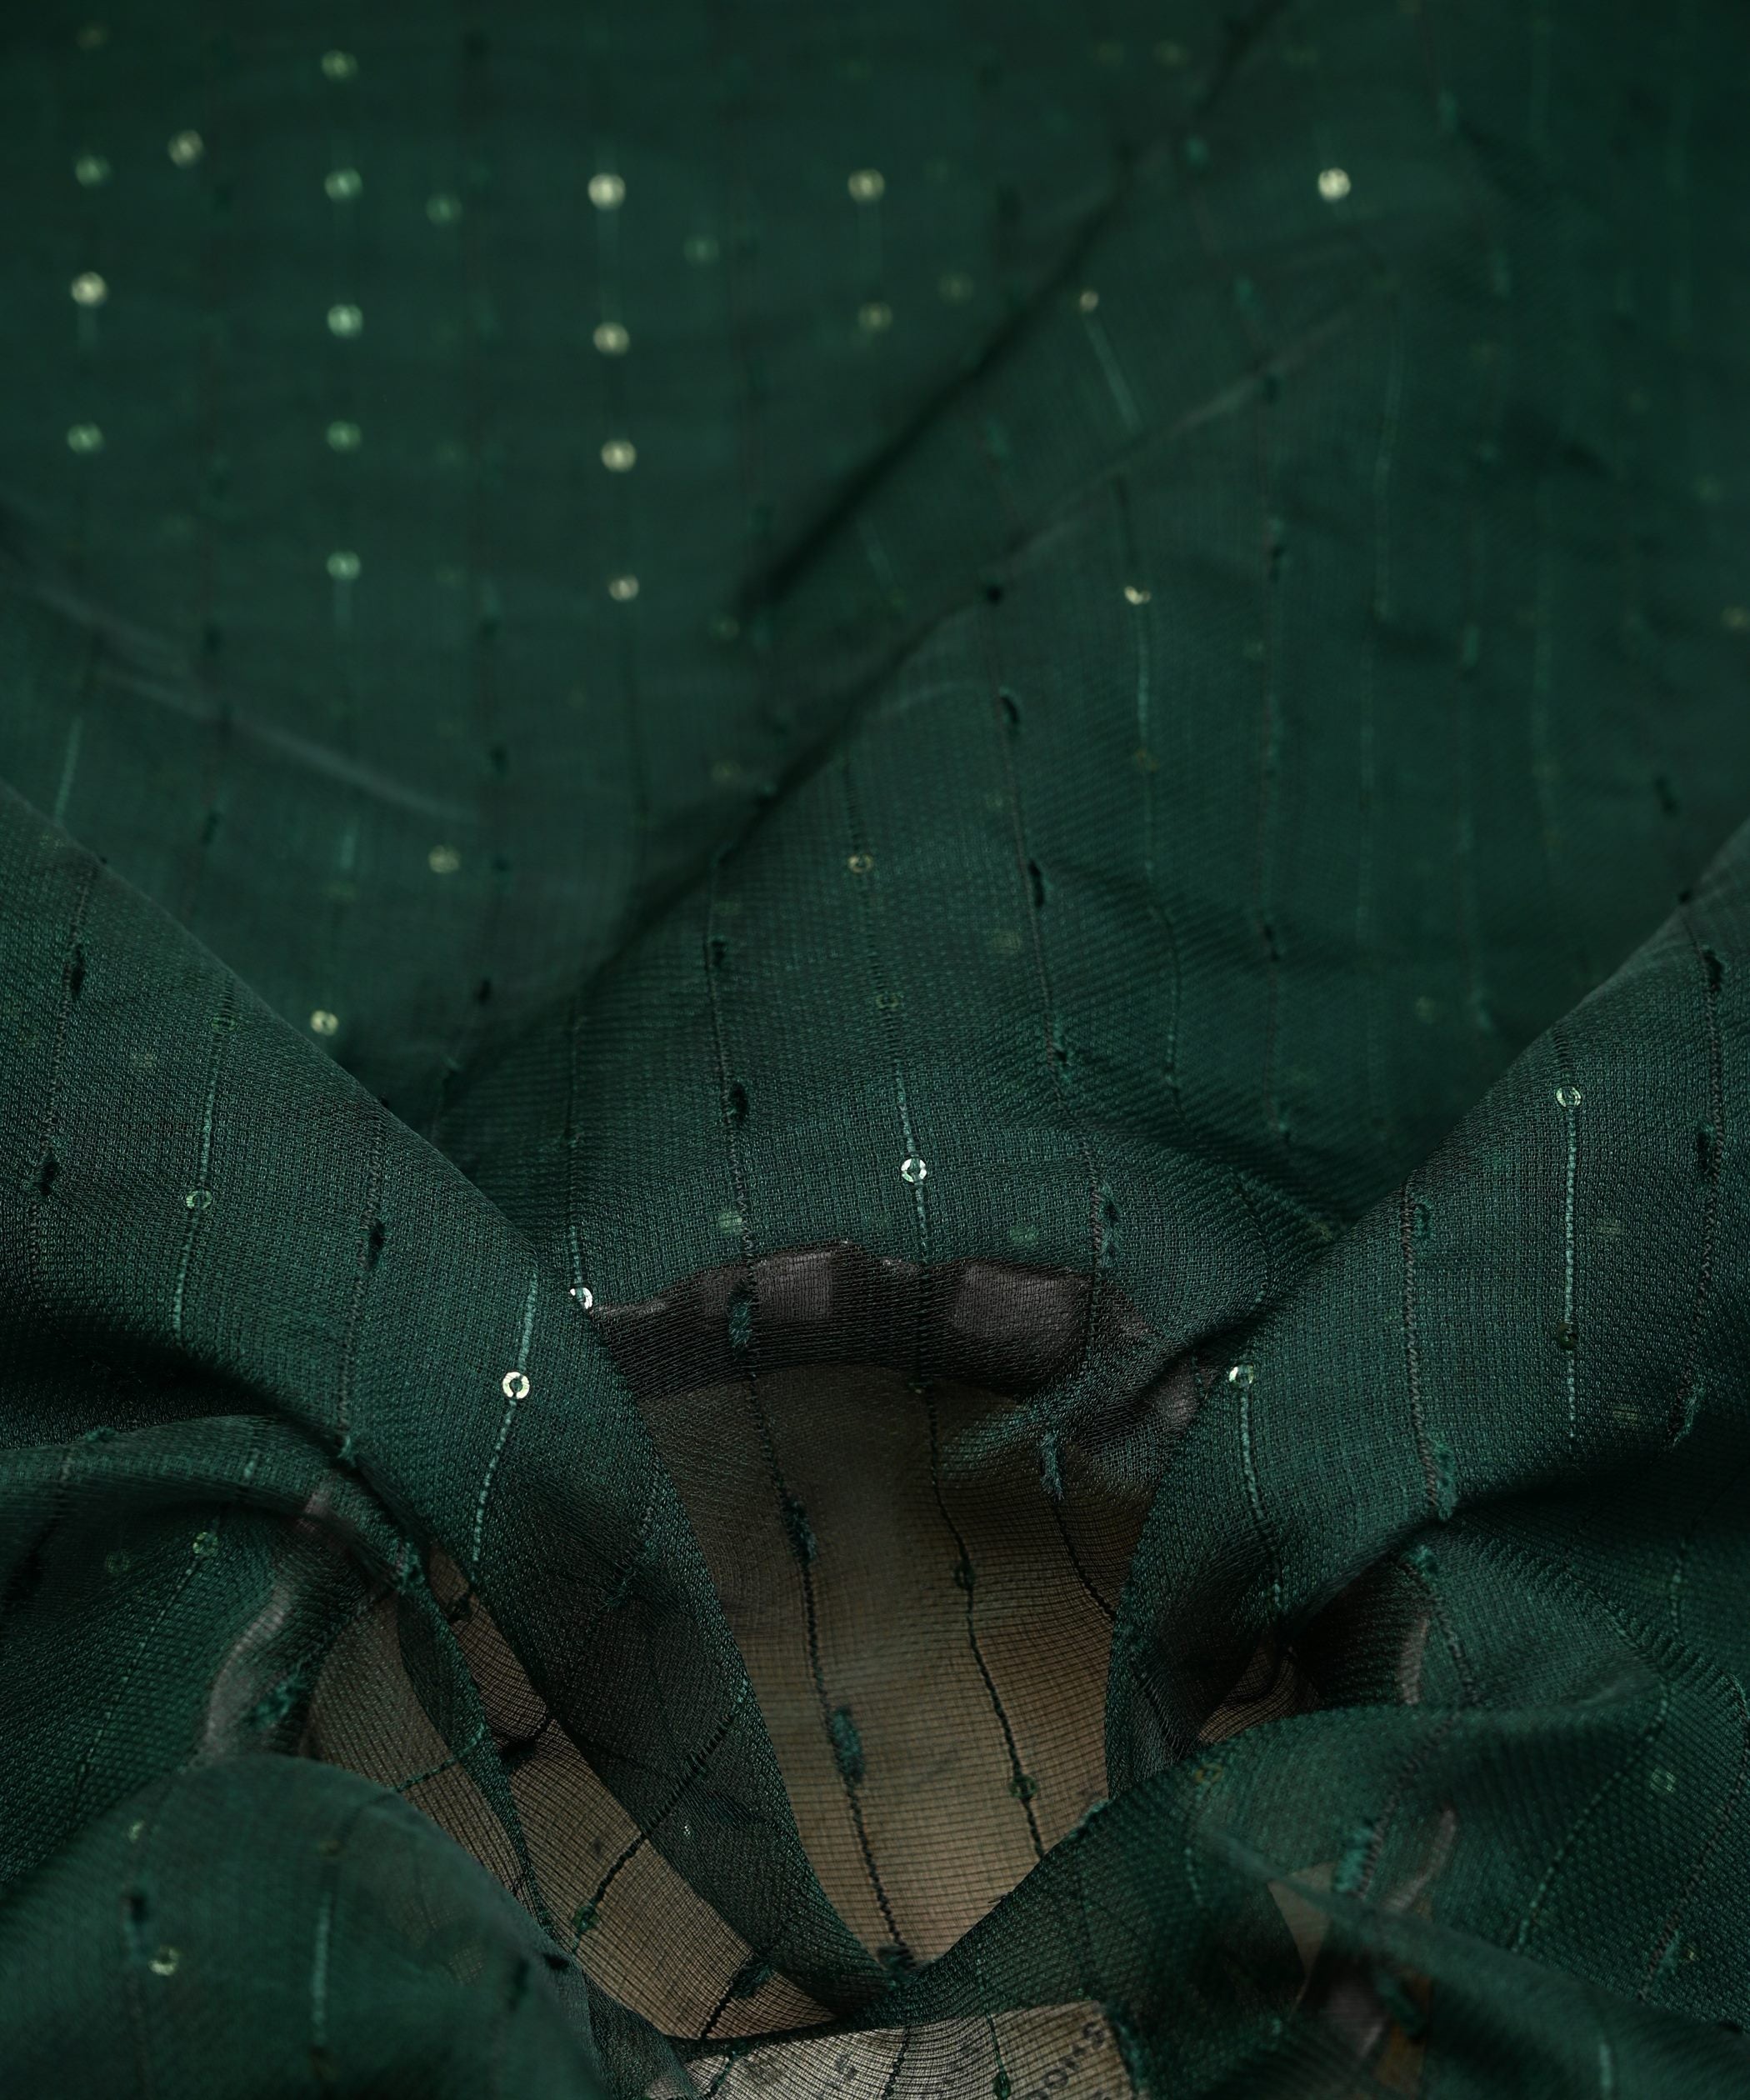 Dark Green Semi Net Fabric with Thread Sequin Lining